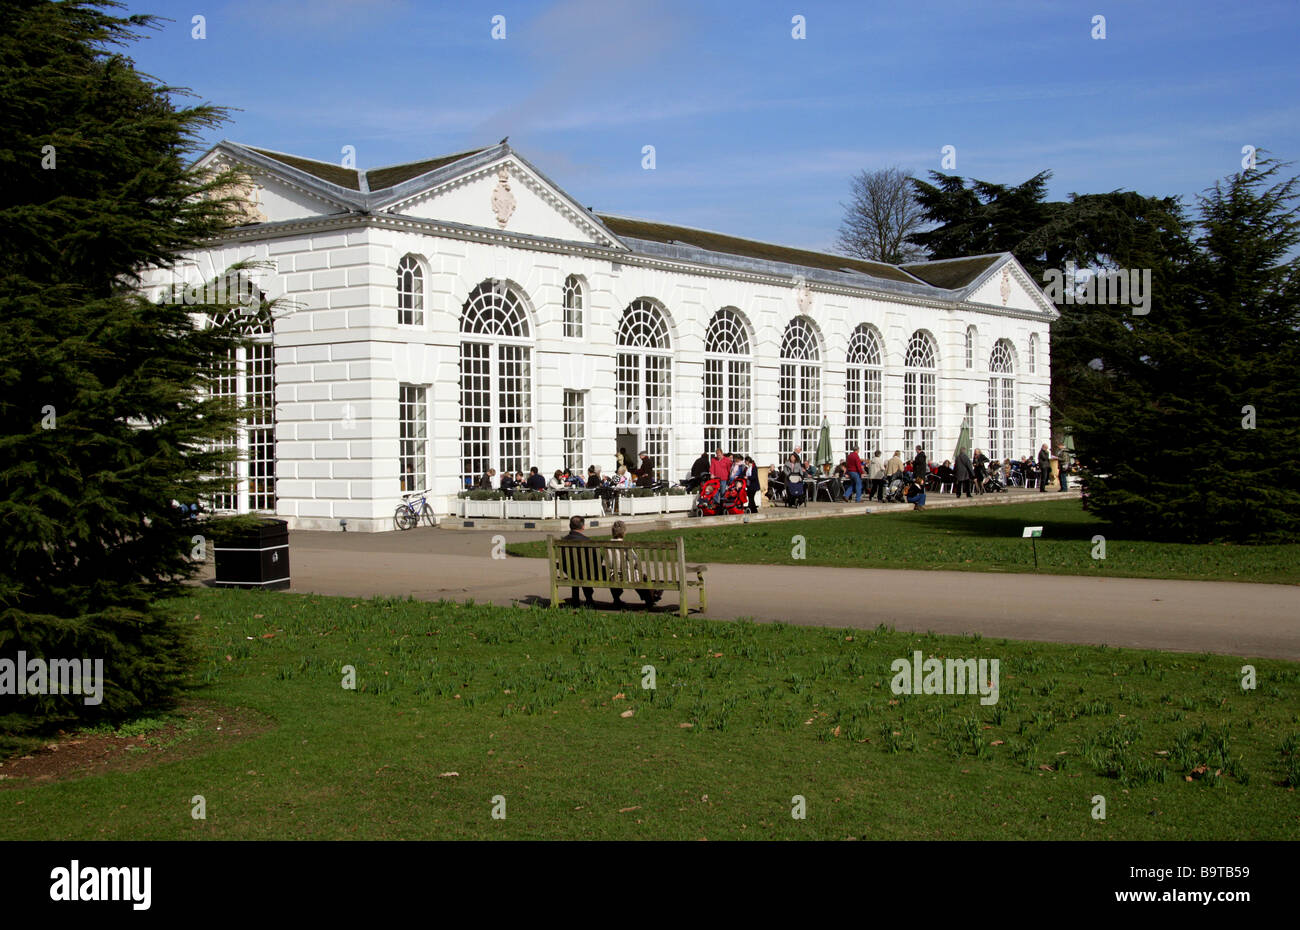 L'Orangerie, Royal Botanic Gardens, Kew, Richmond, Surrey, Angleterre, Grande-Bretagne, Royaume-Uni Banque D'Images